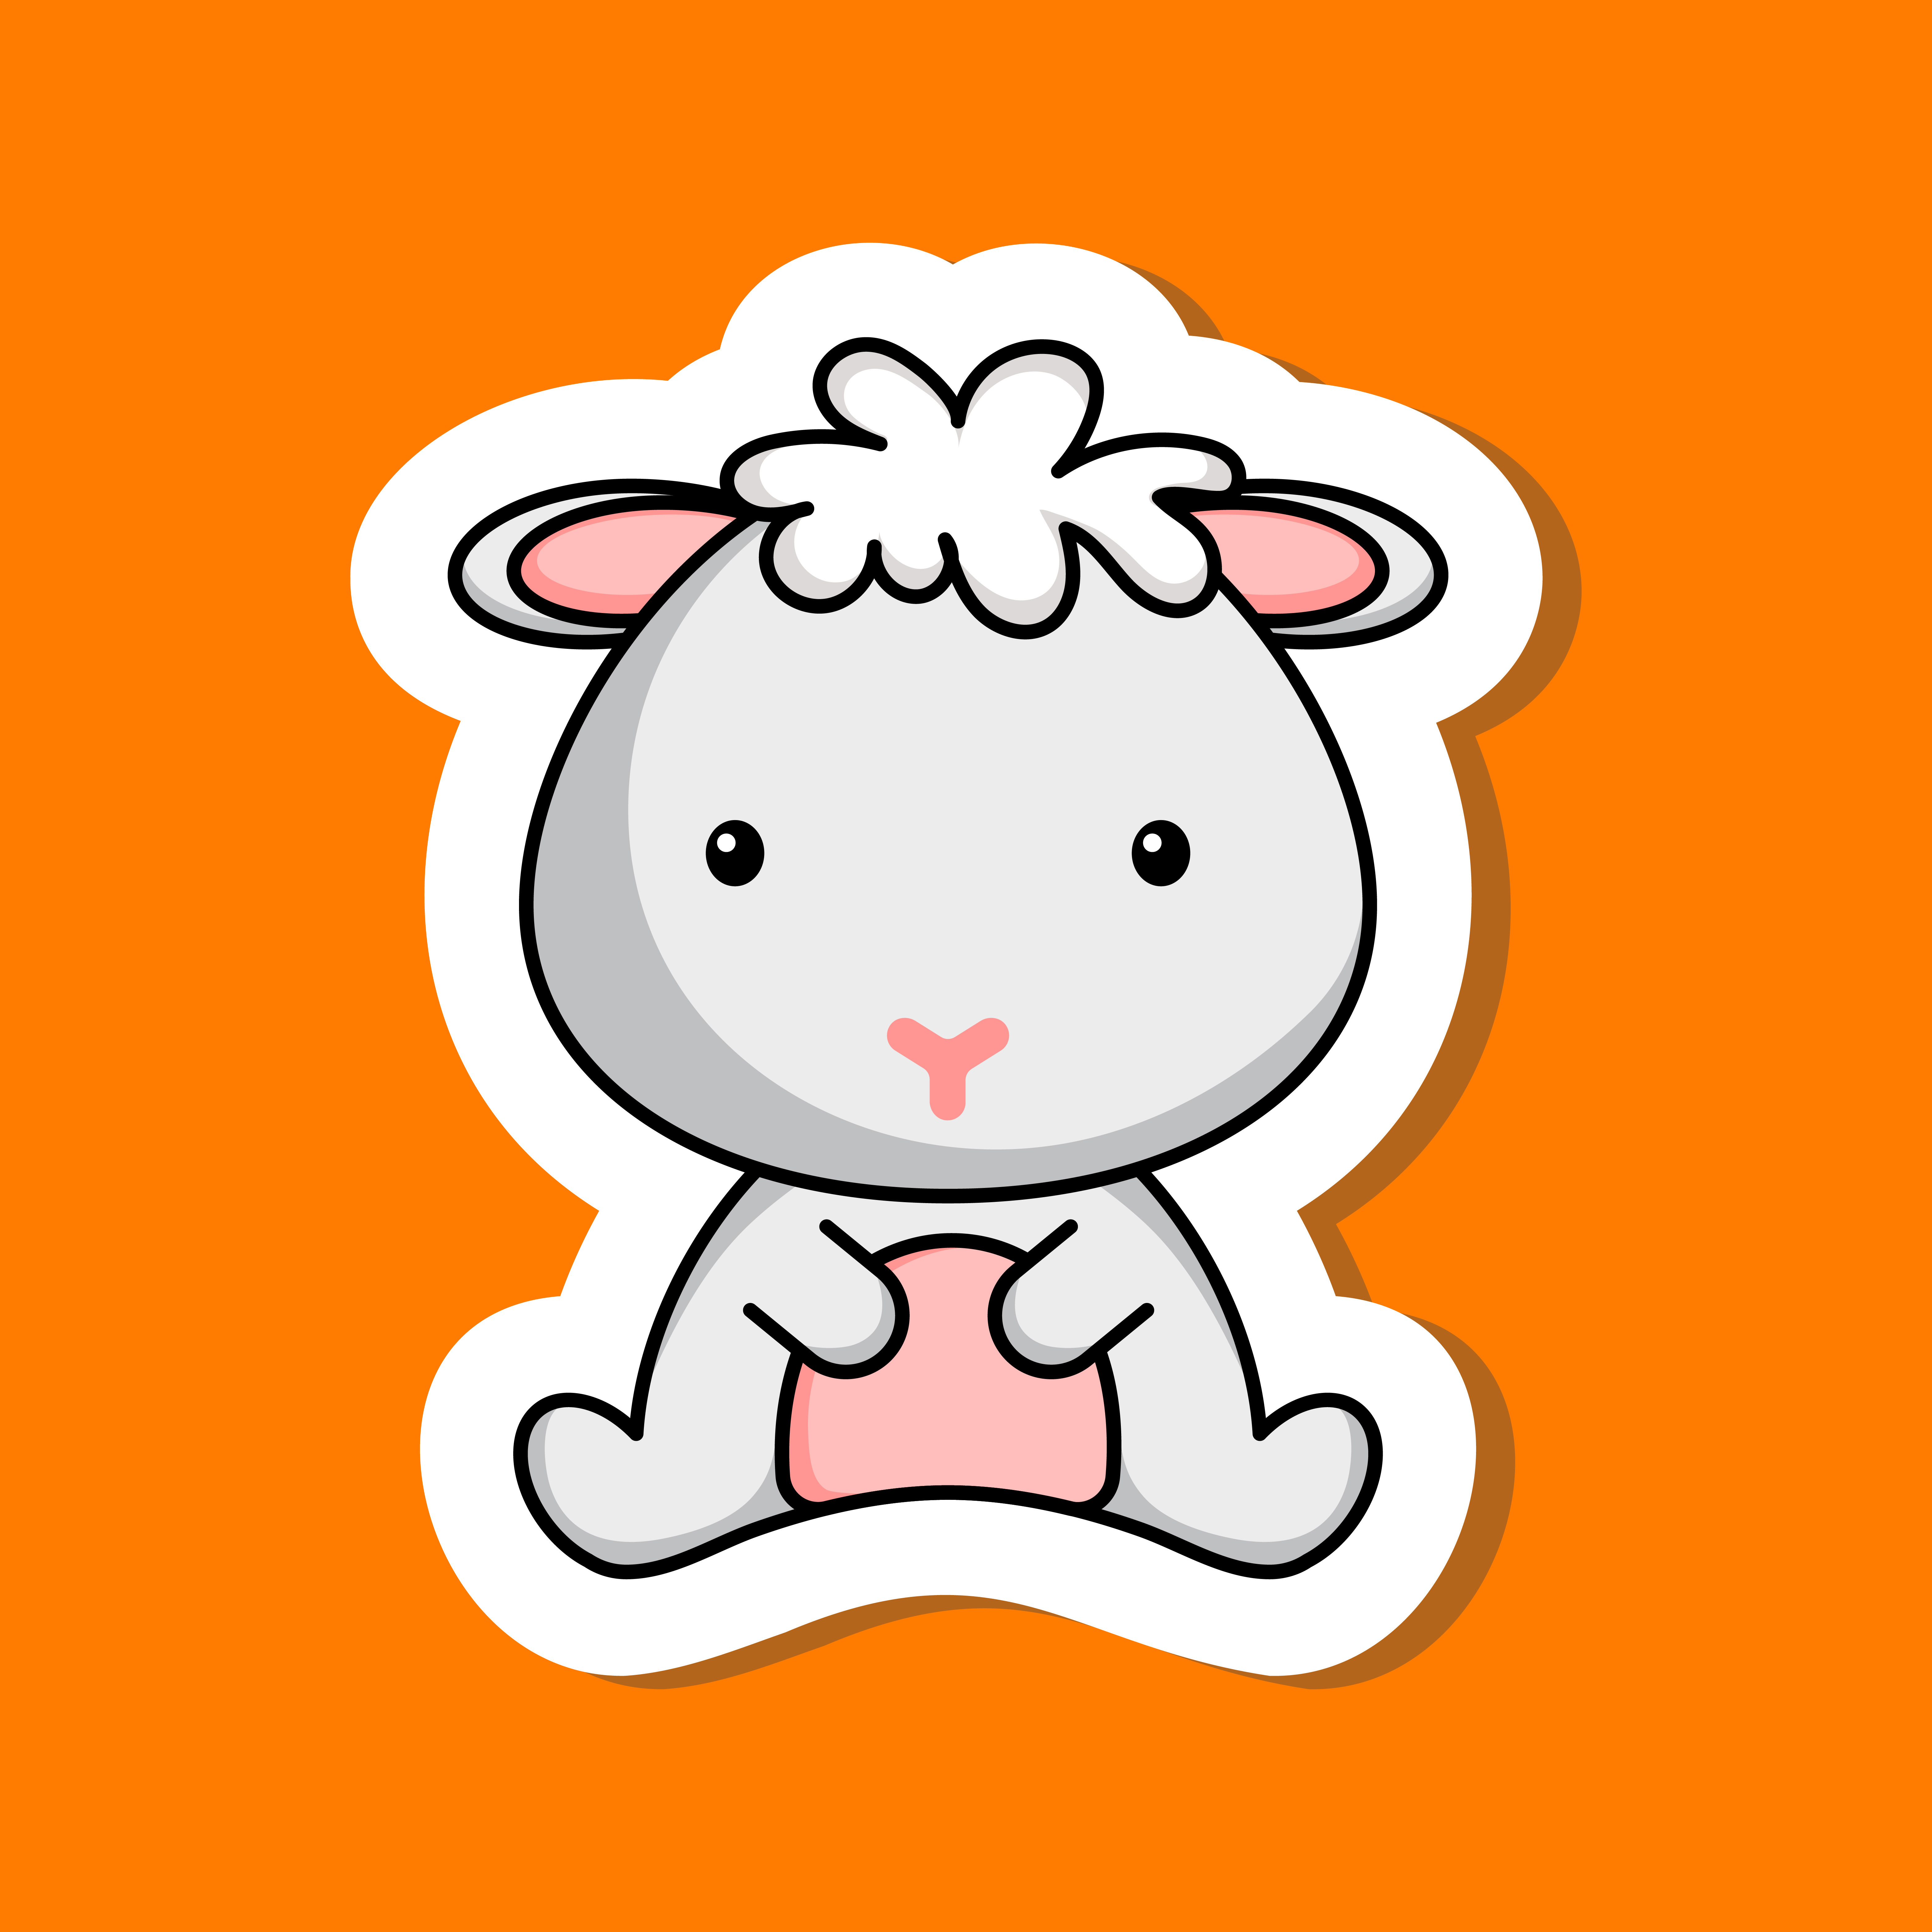 Cute cartoon sticker little sheep logo template. Mascot animal character design of album, scrapbook, greeting card, invitation, flyer, sticker, card. Vector stock illustration.